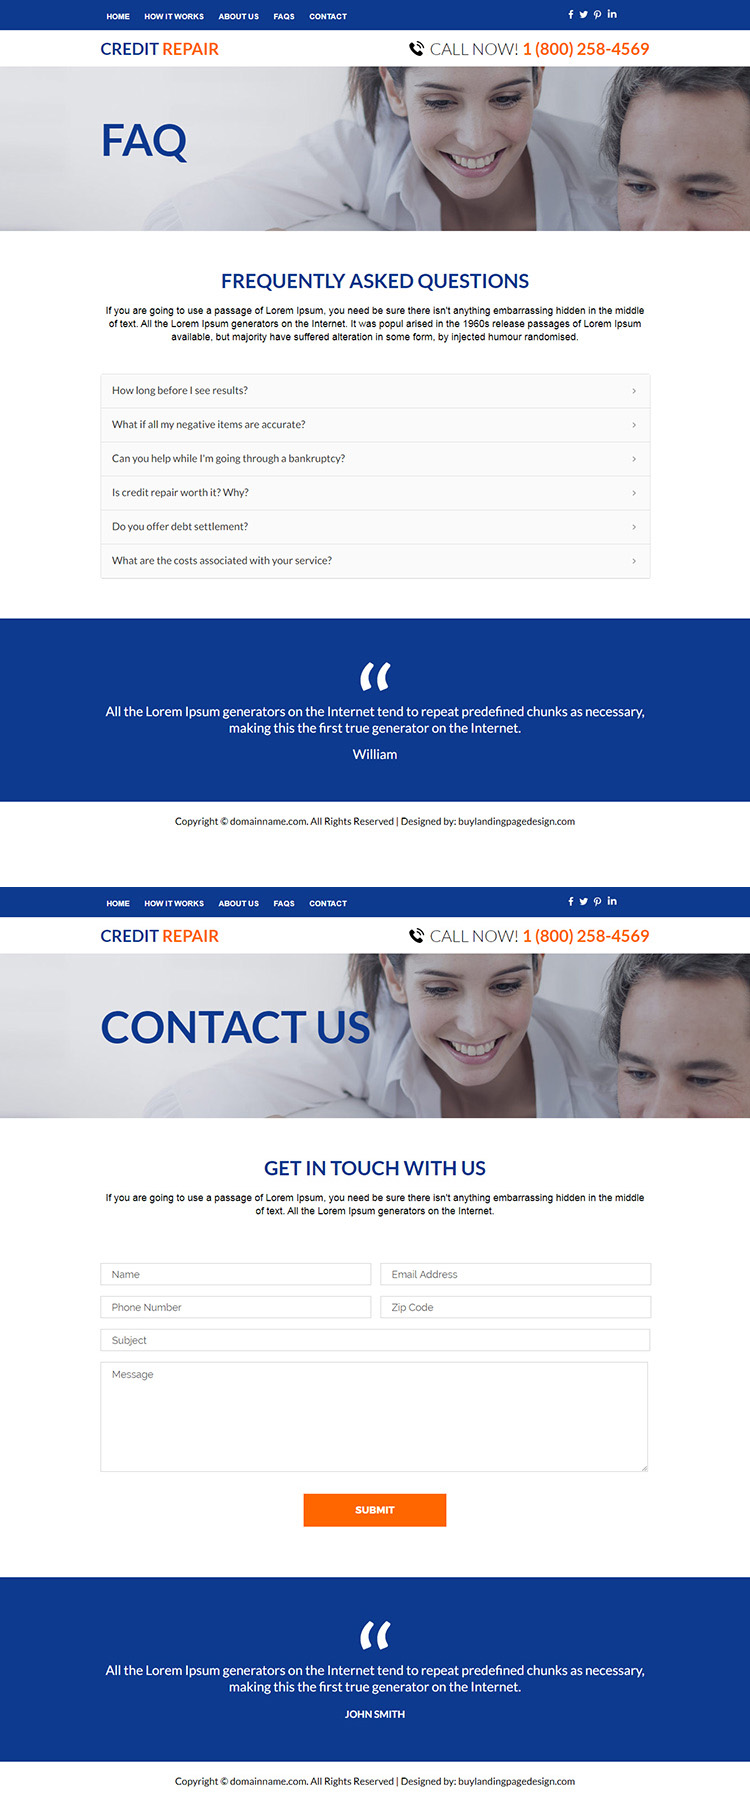 professional credit repair sign up capturing responsive website design